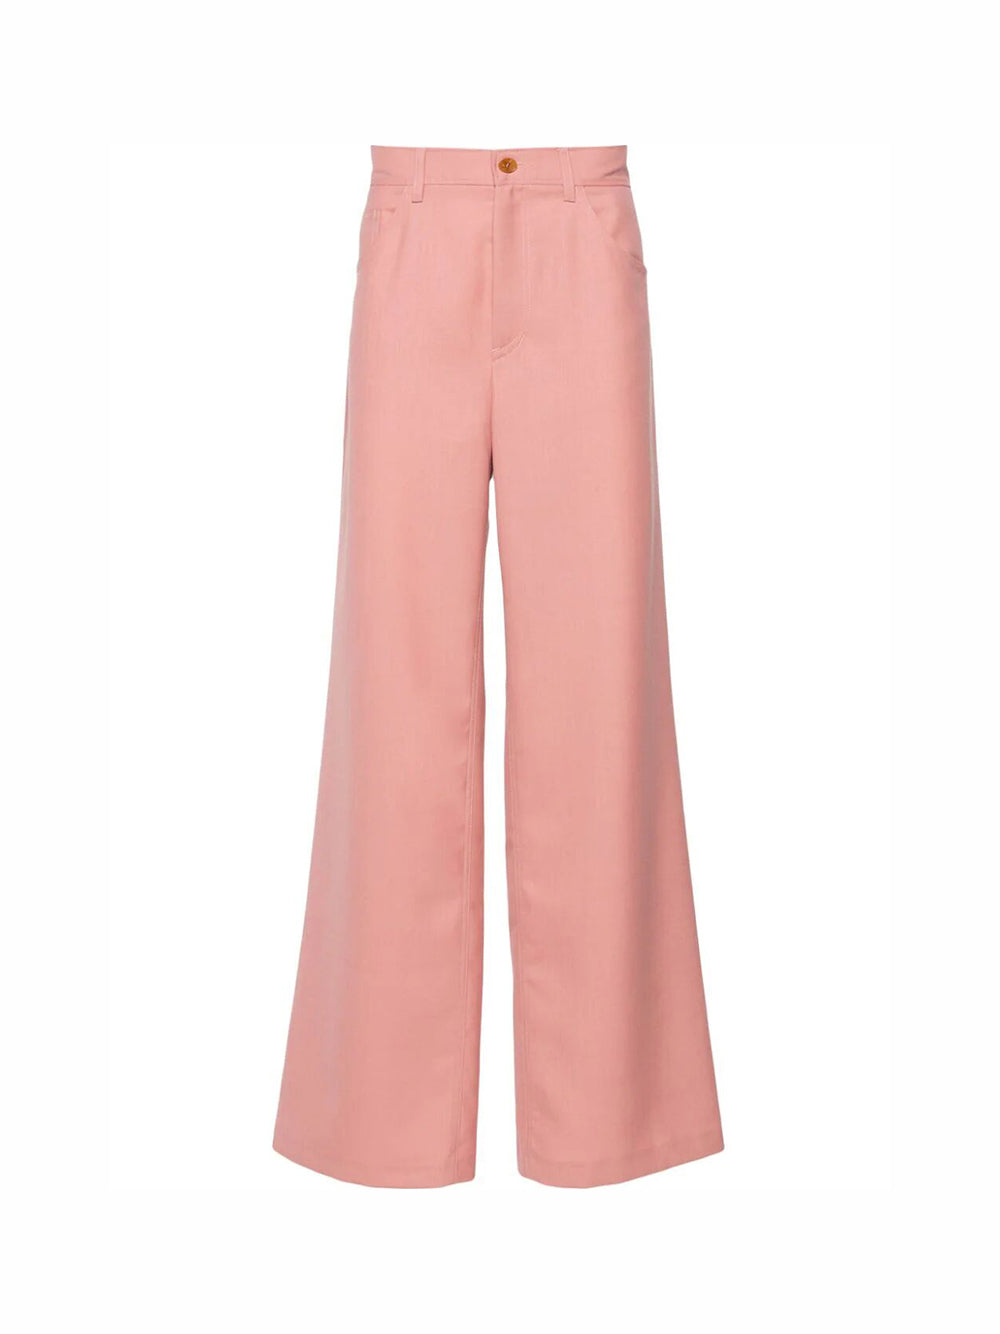 Jiro pink trousers